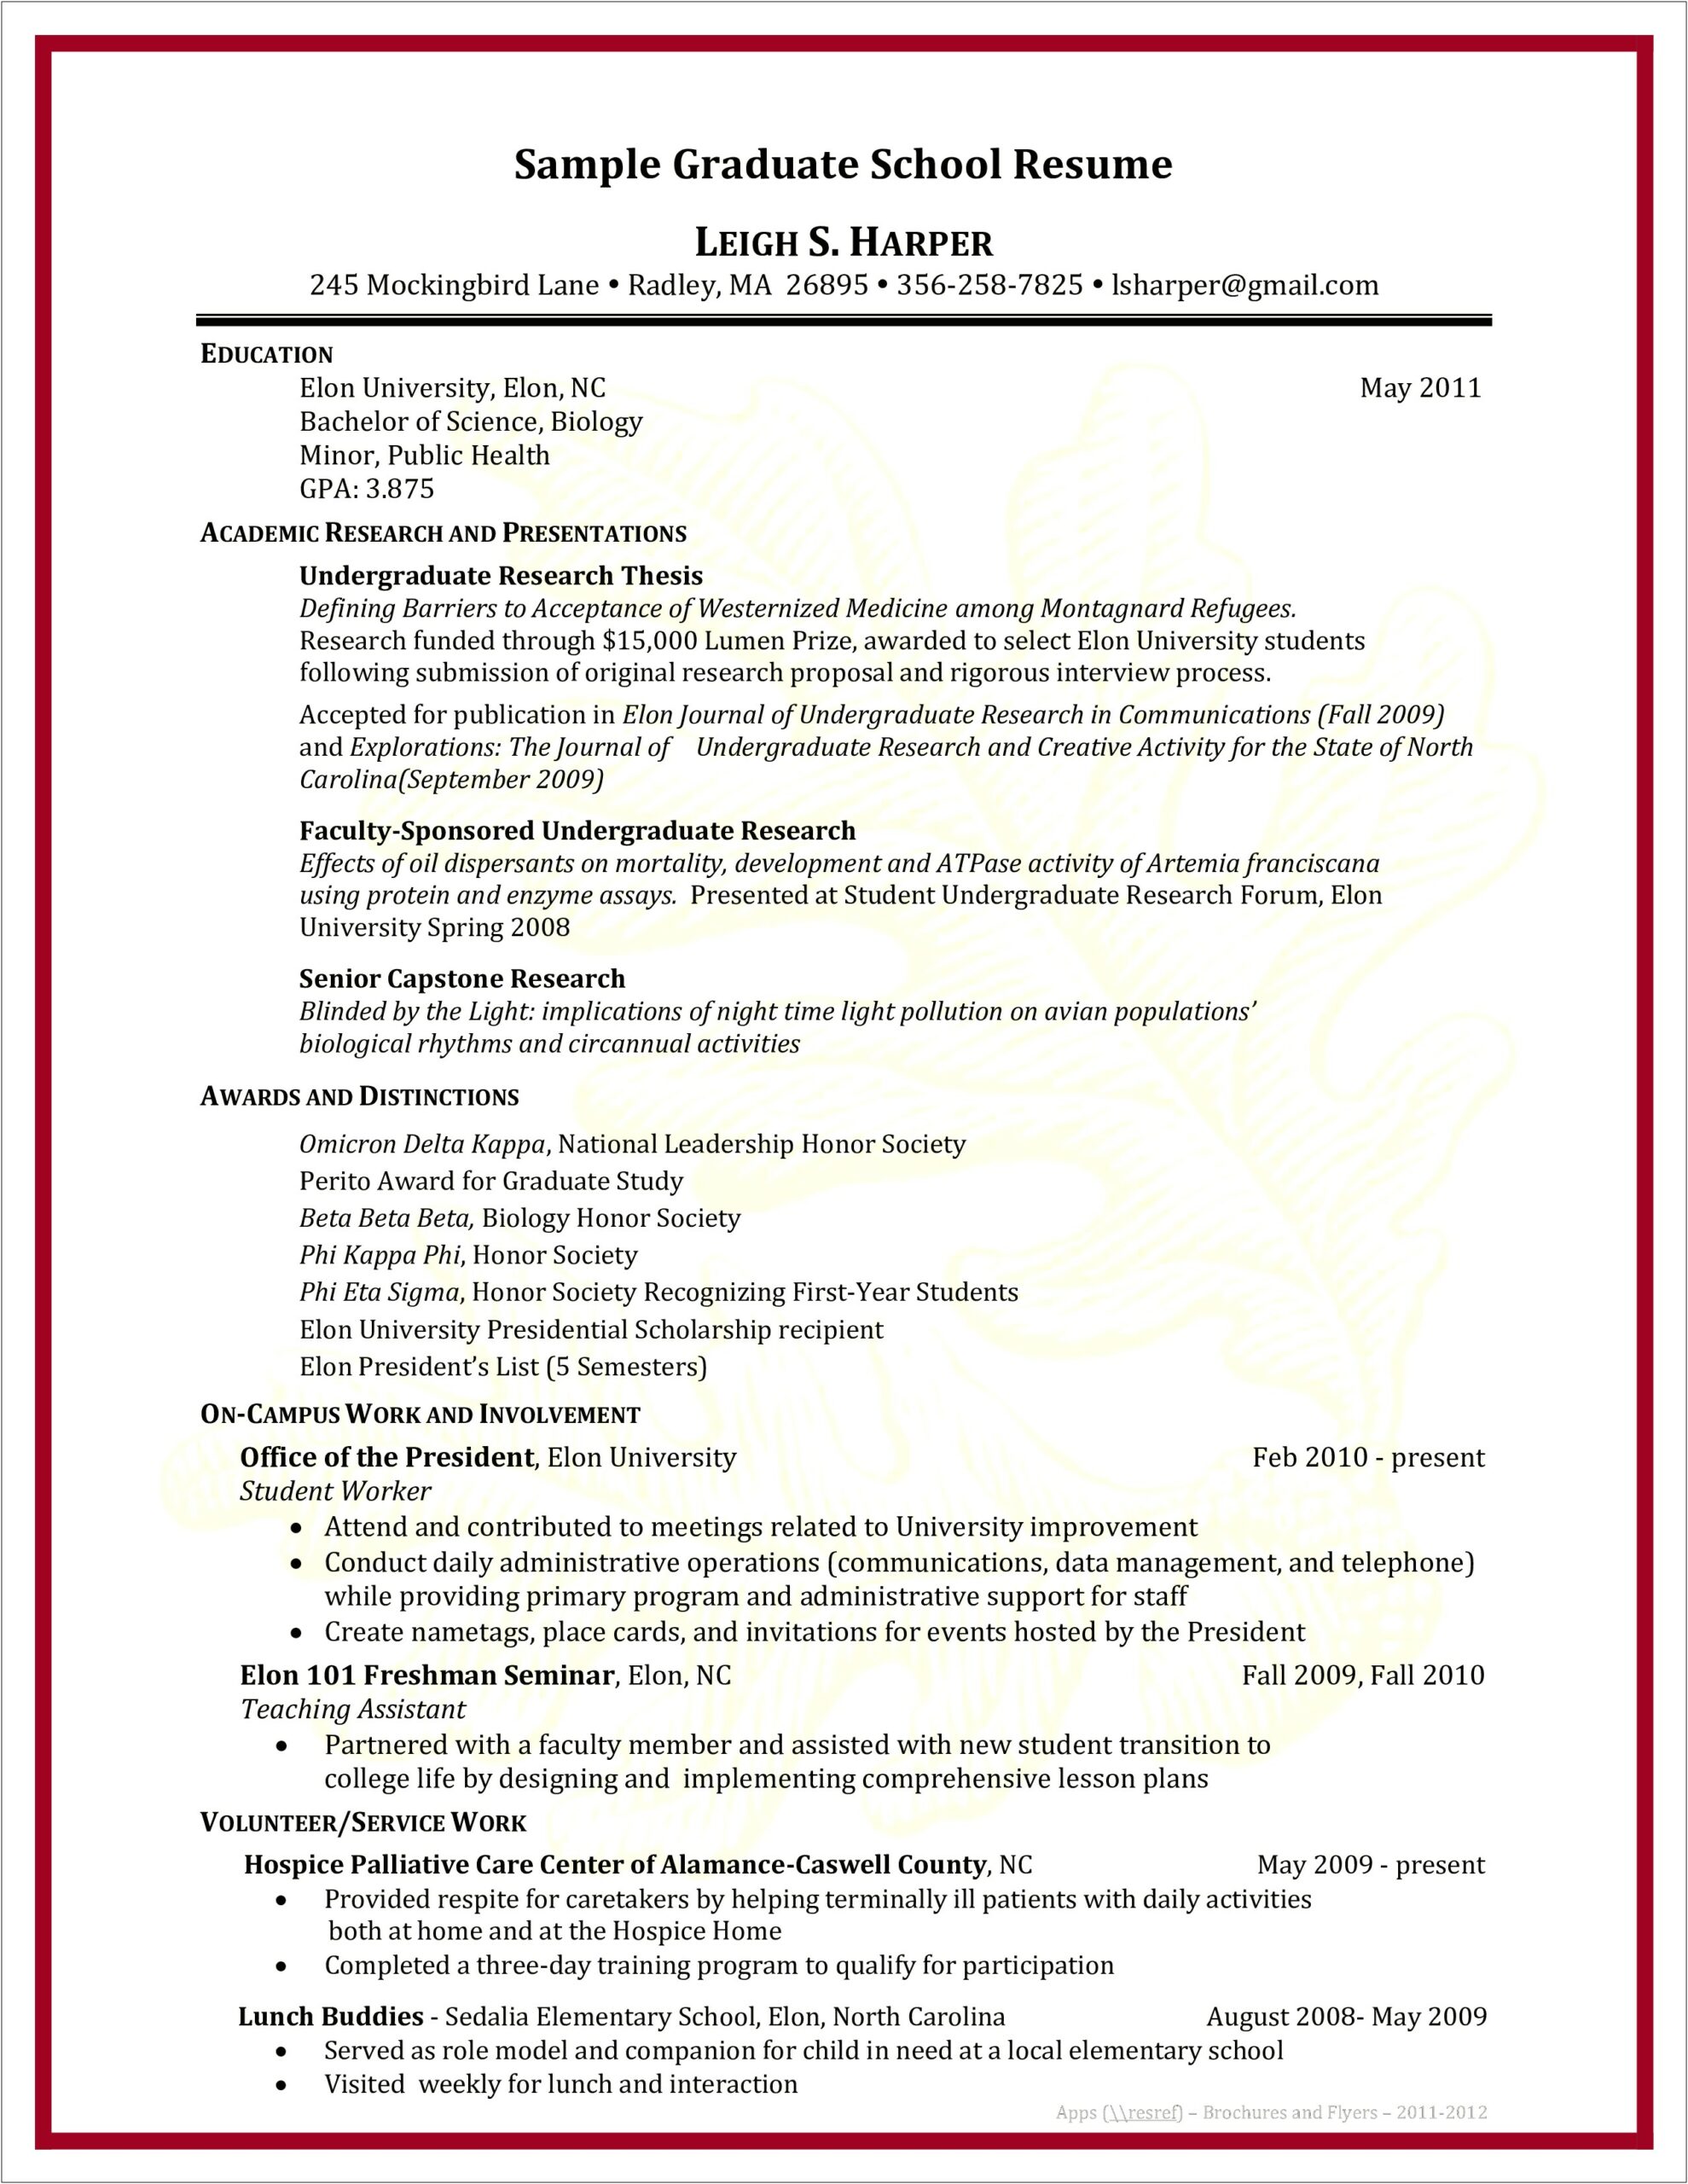 Resume Sample Graduate School Application